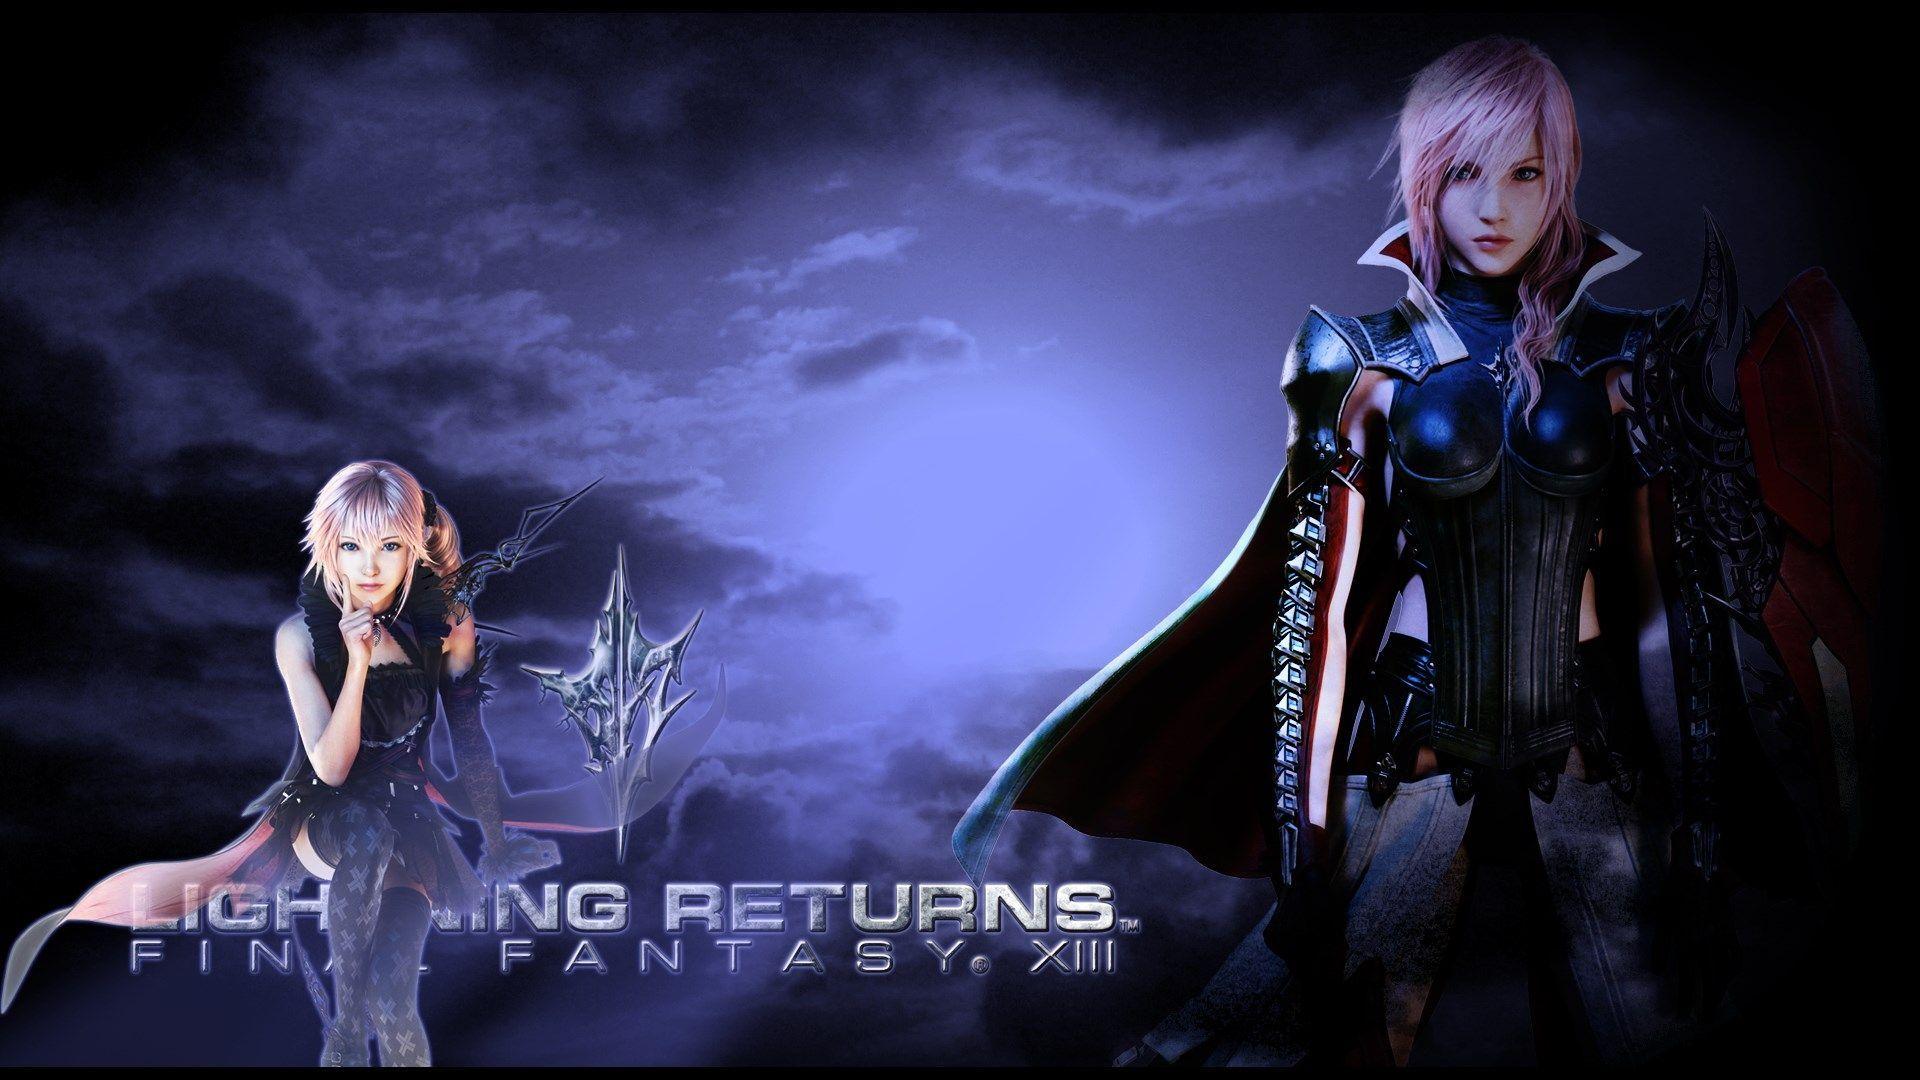 Final Fantasy XIII: Lightning Returns game wallpaper